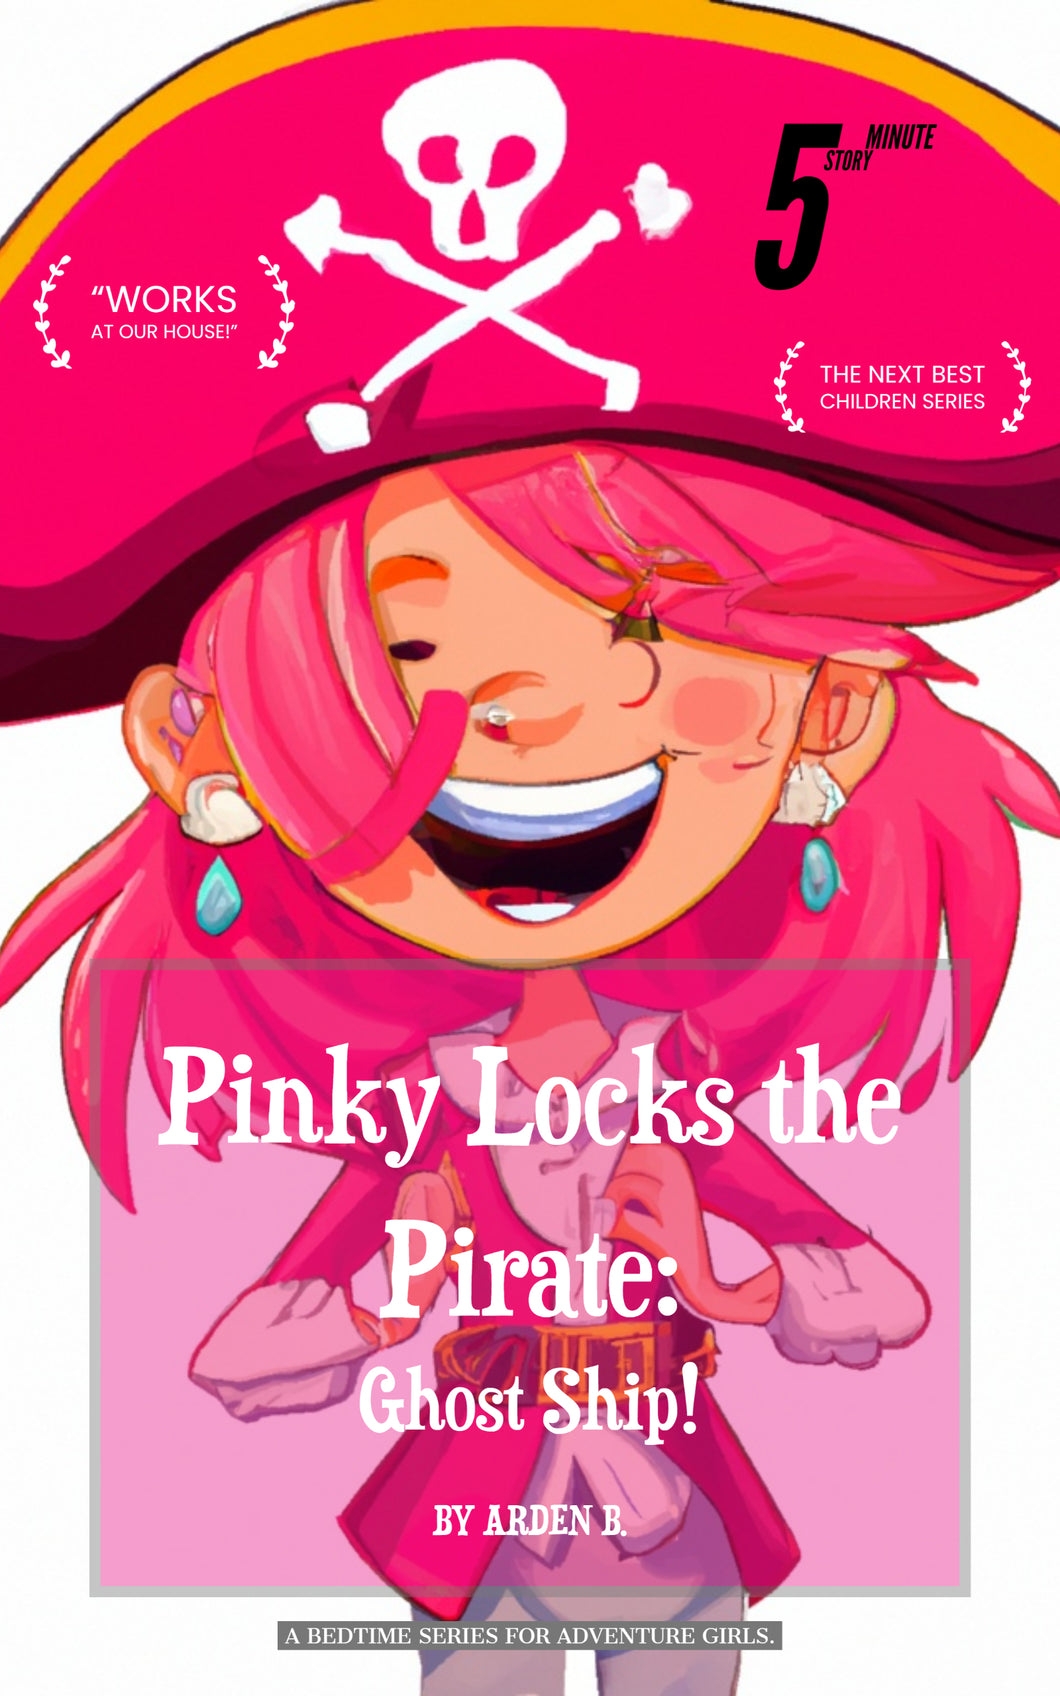 Pinky Locks the Pirate: Ghost Ship!